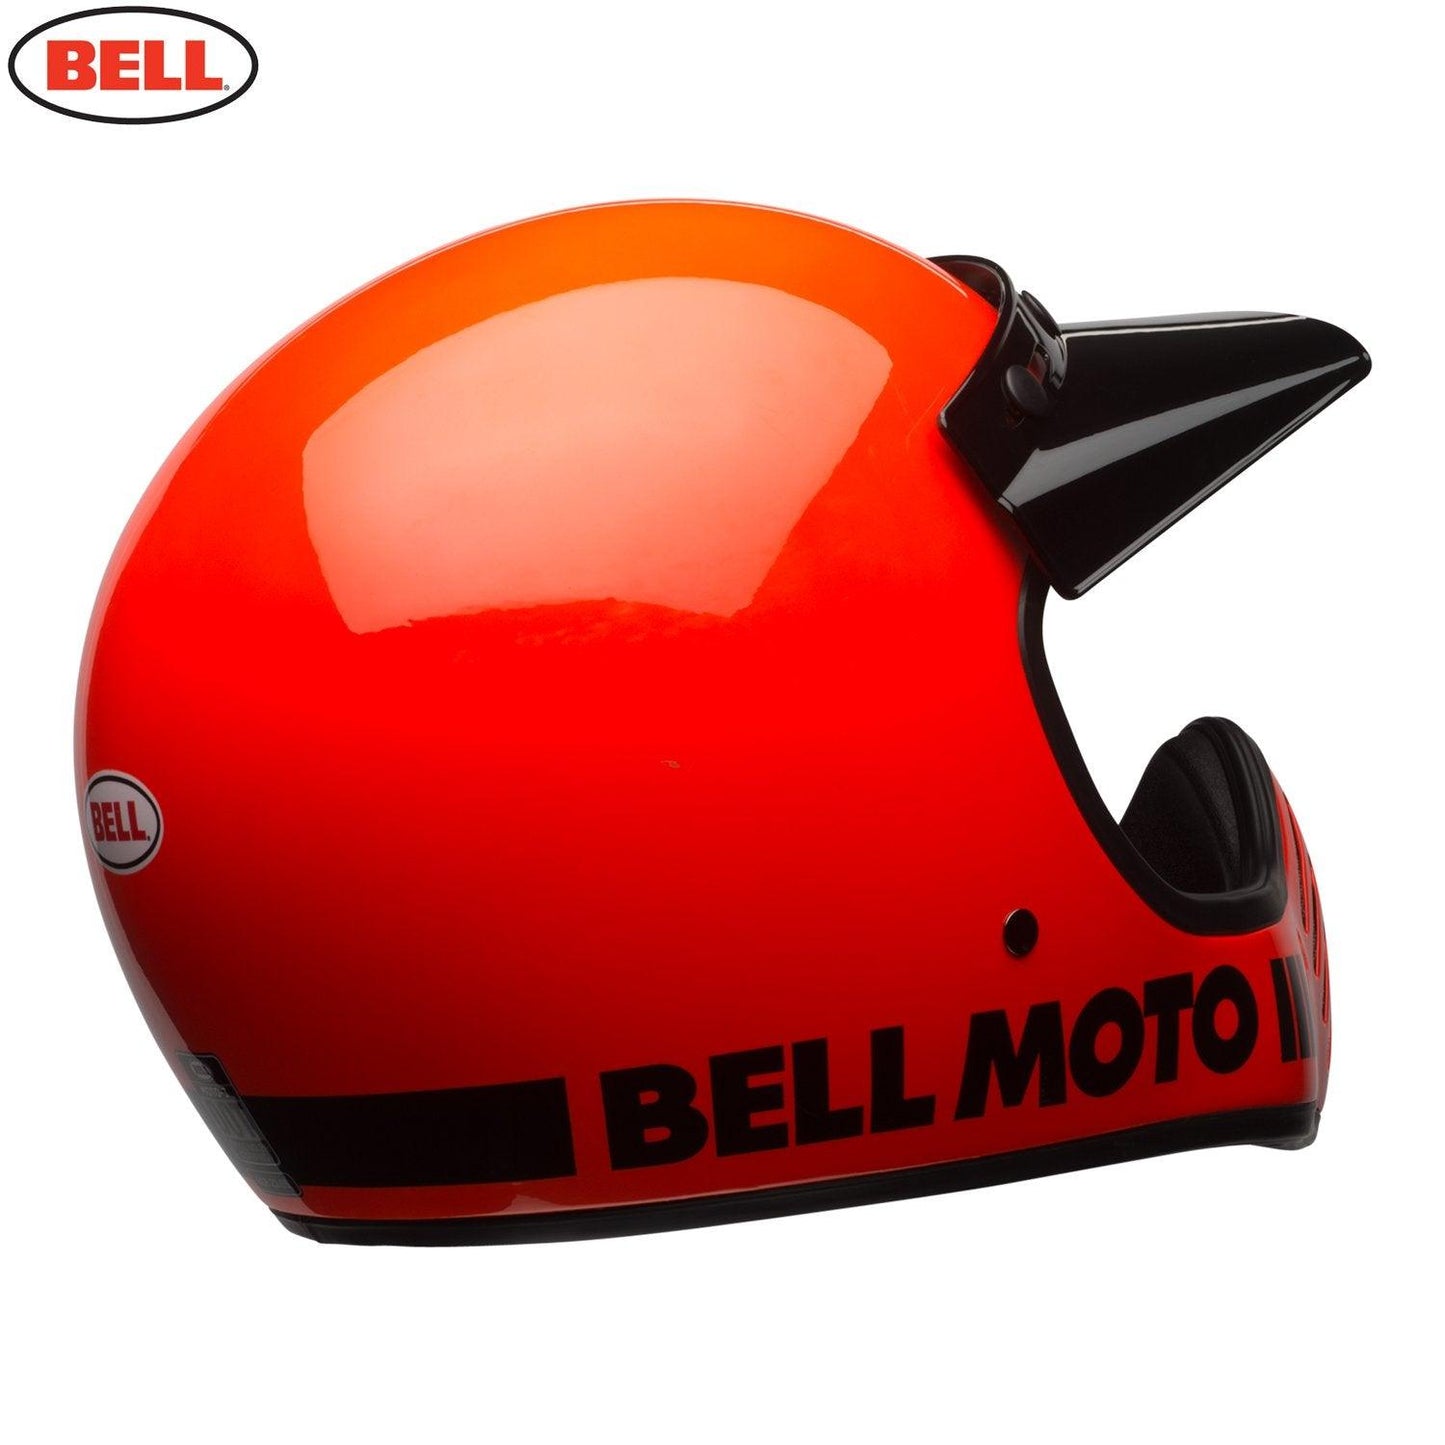 Moto-3 Classic - Newmarket Motorcycle Company 